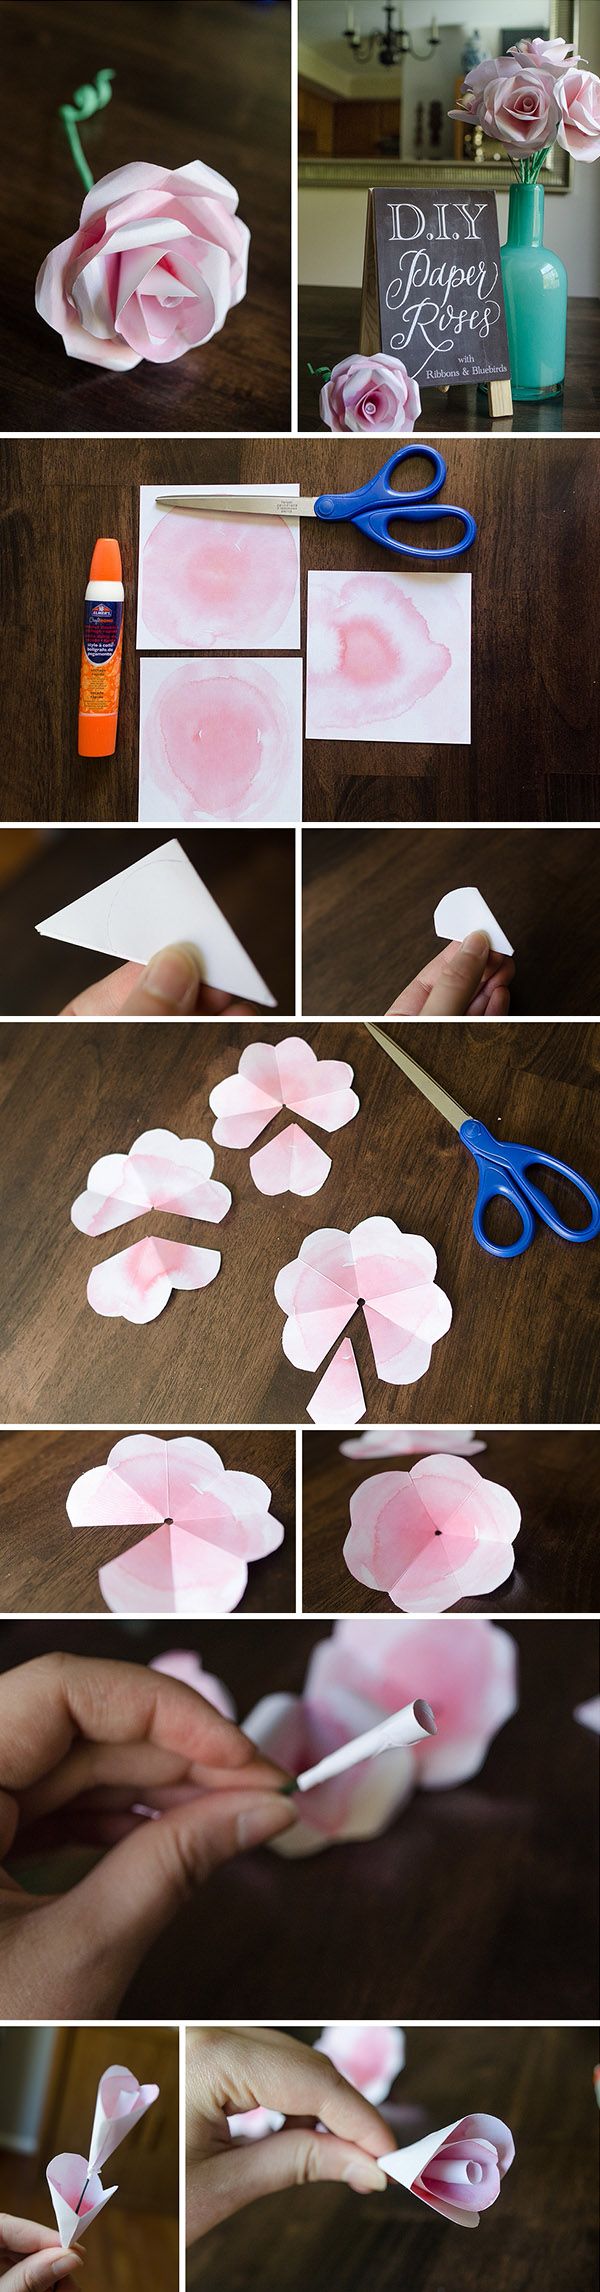 Diy paper flowers for rustic wedding ideas